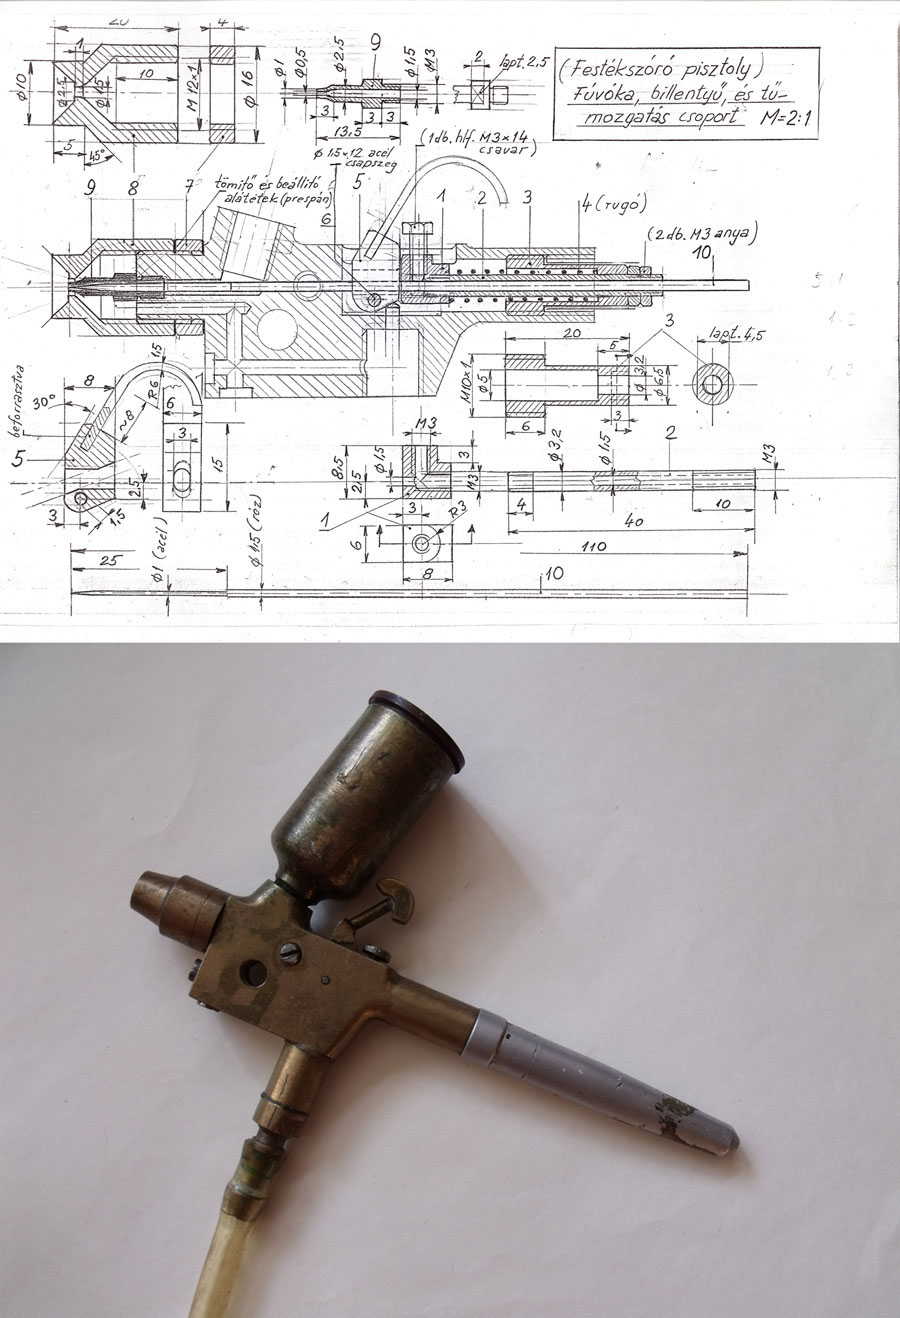 Szentirmai Kálmán Mechanical Drawing raba handmade no digital software Kispest